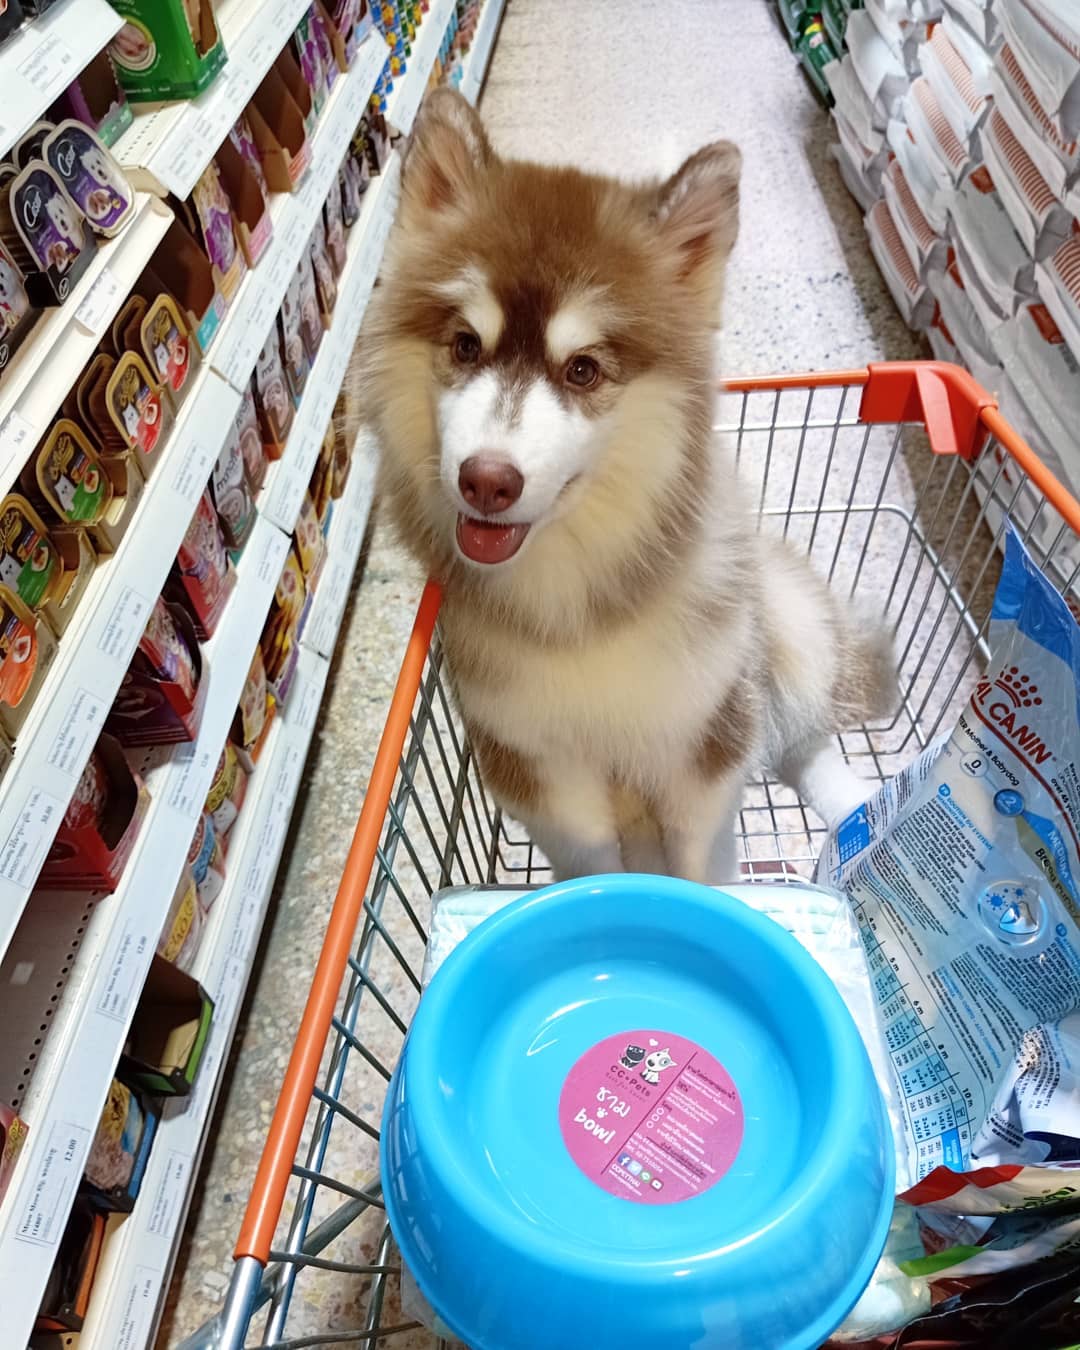 A Husky puppy sitting inside the push cart